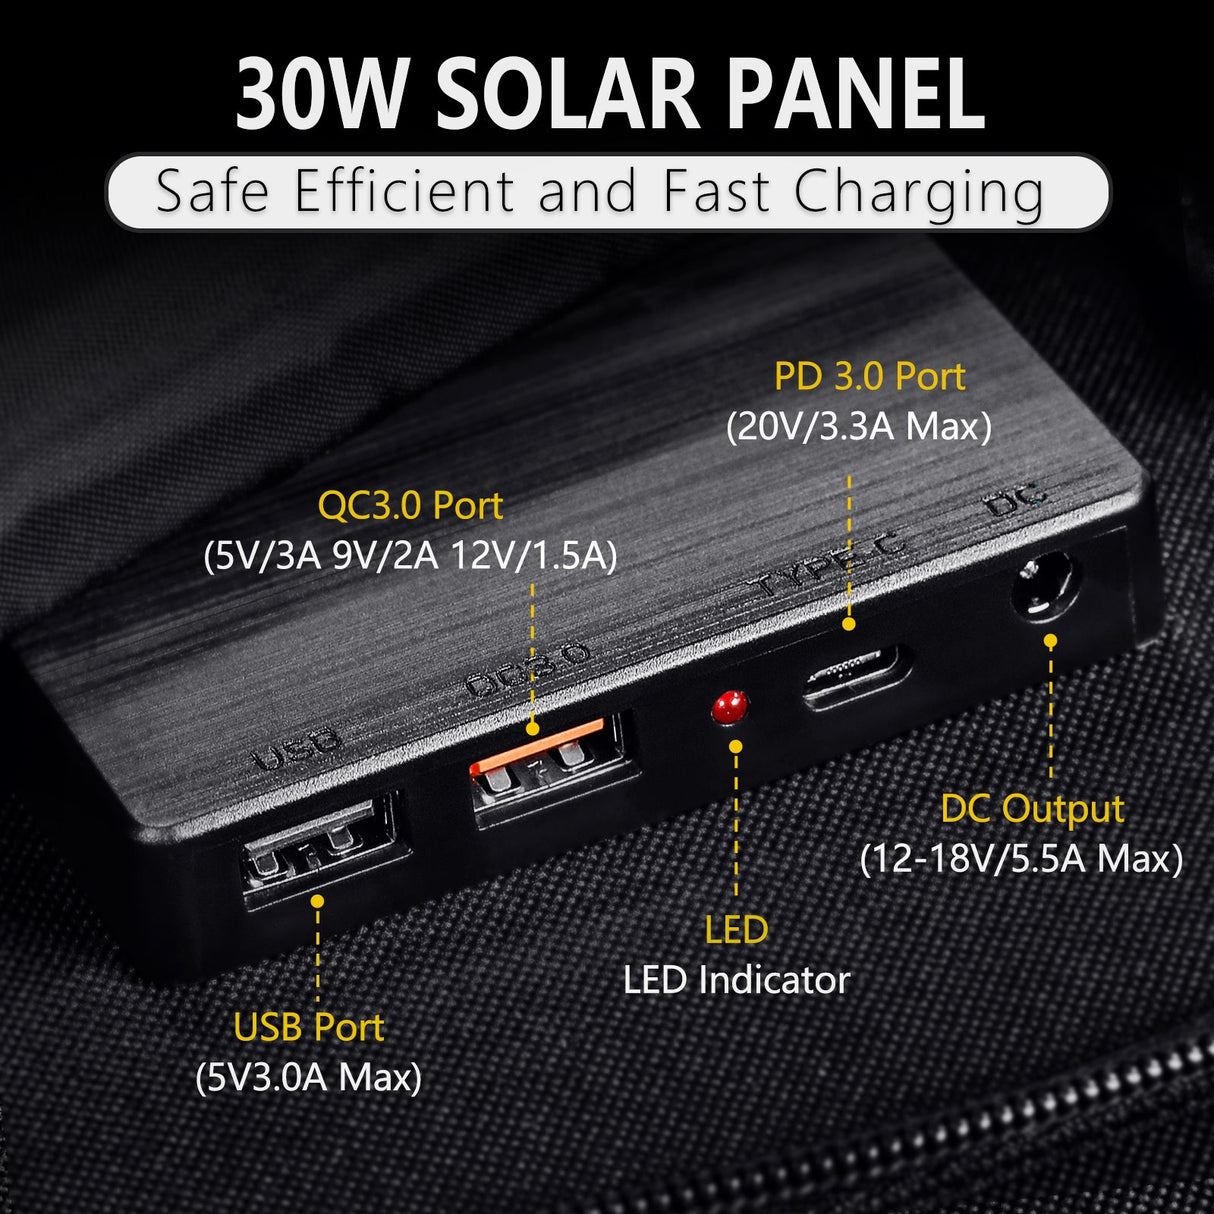 100w-portable-power-station-solar-generator-kit-rocksolar-ca